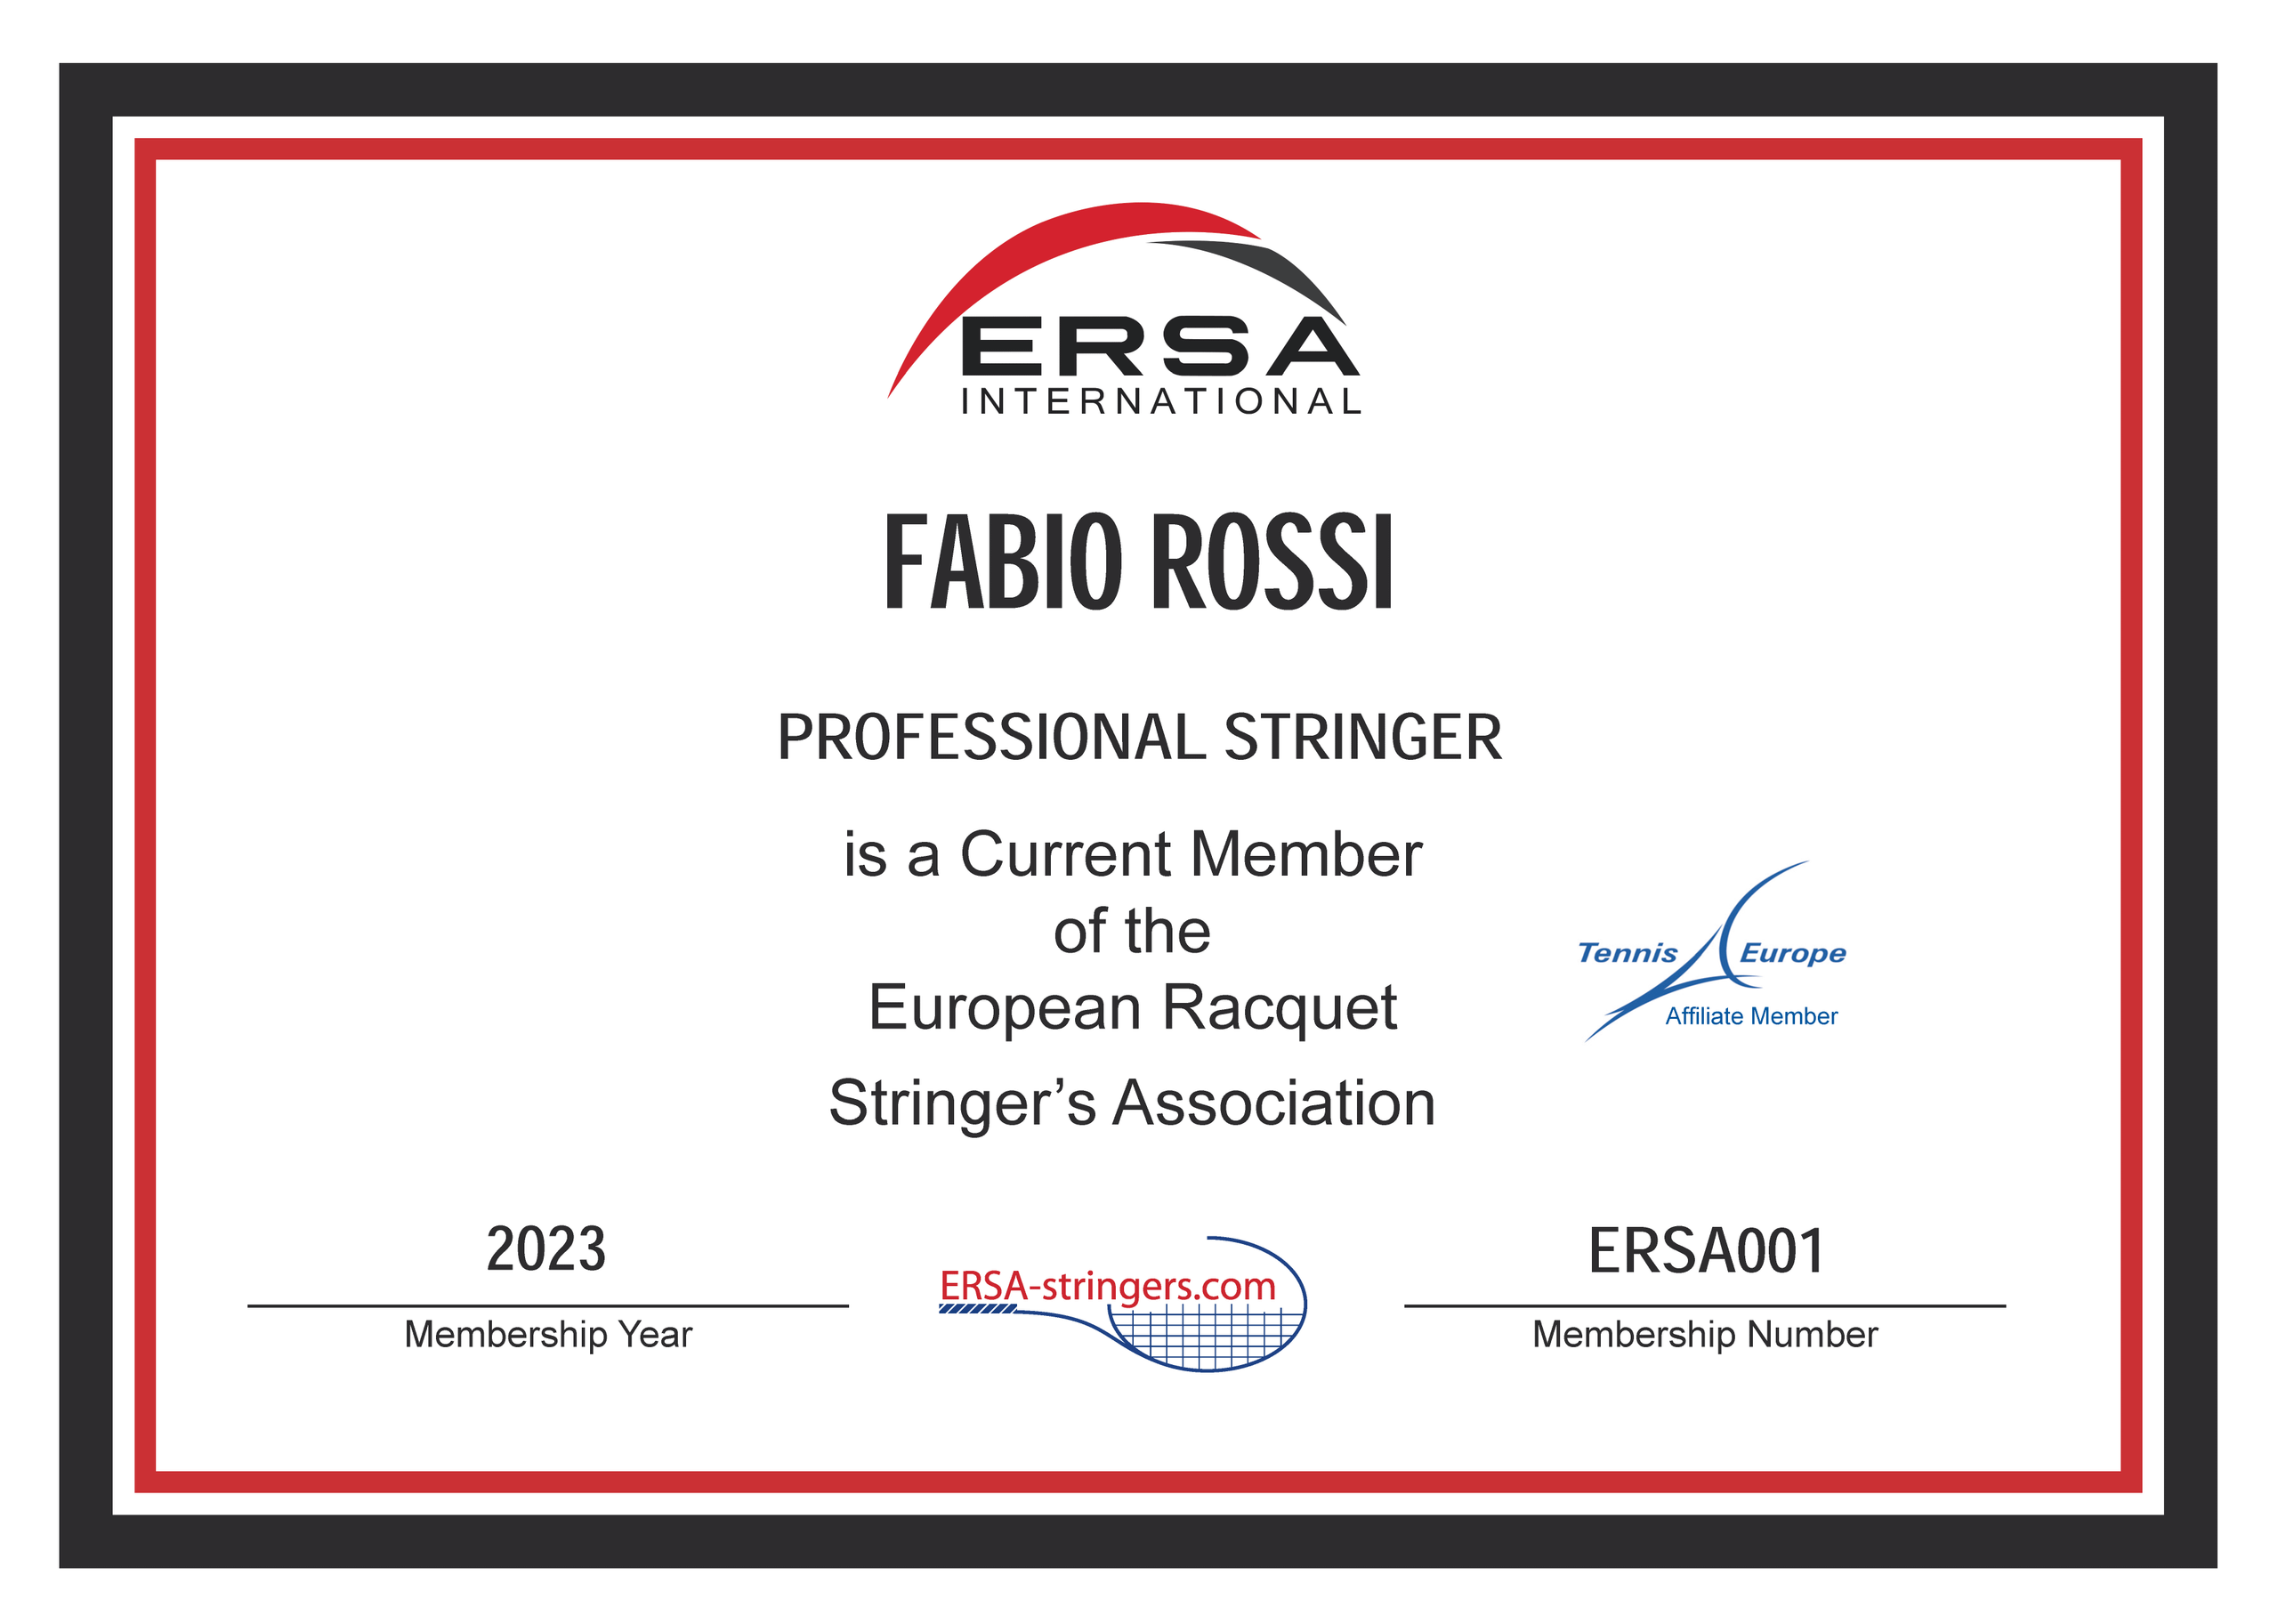 Certificazione ERSA Professional Stringer